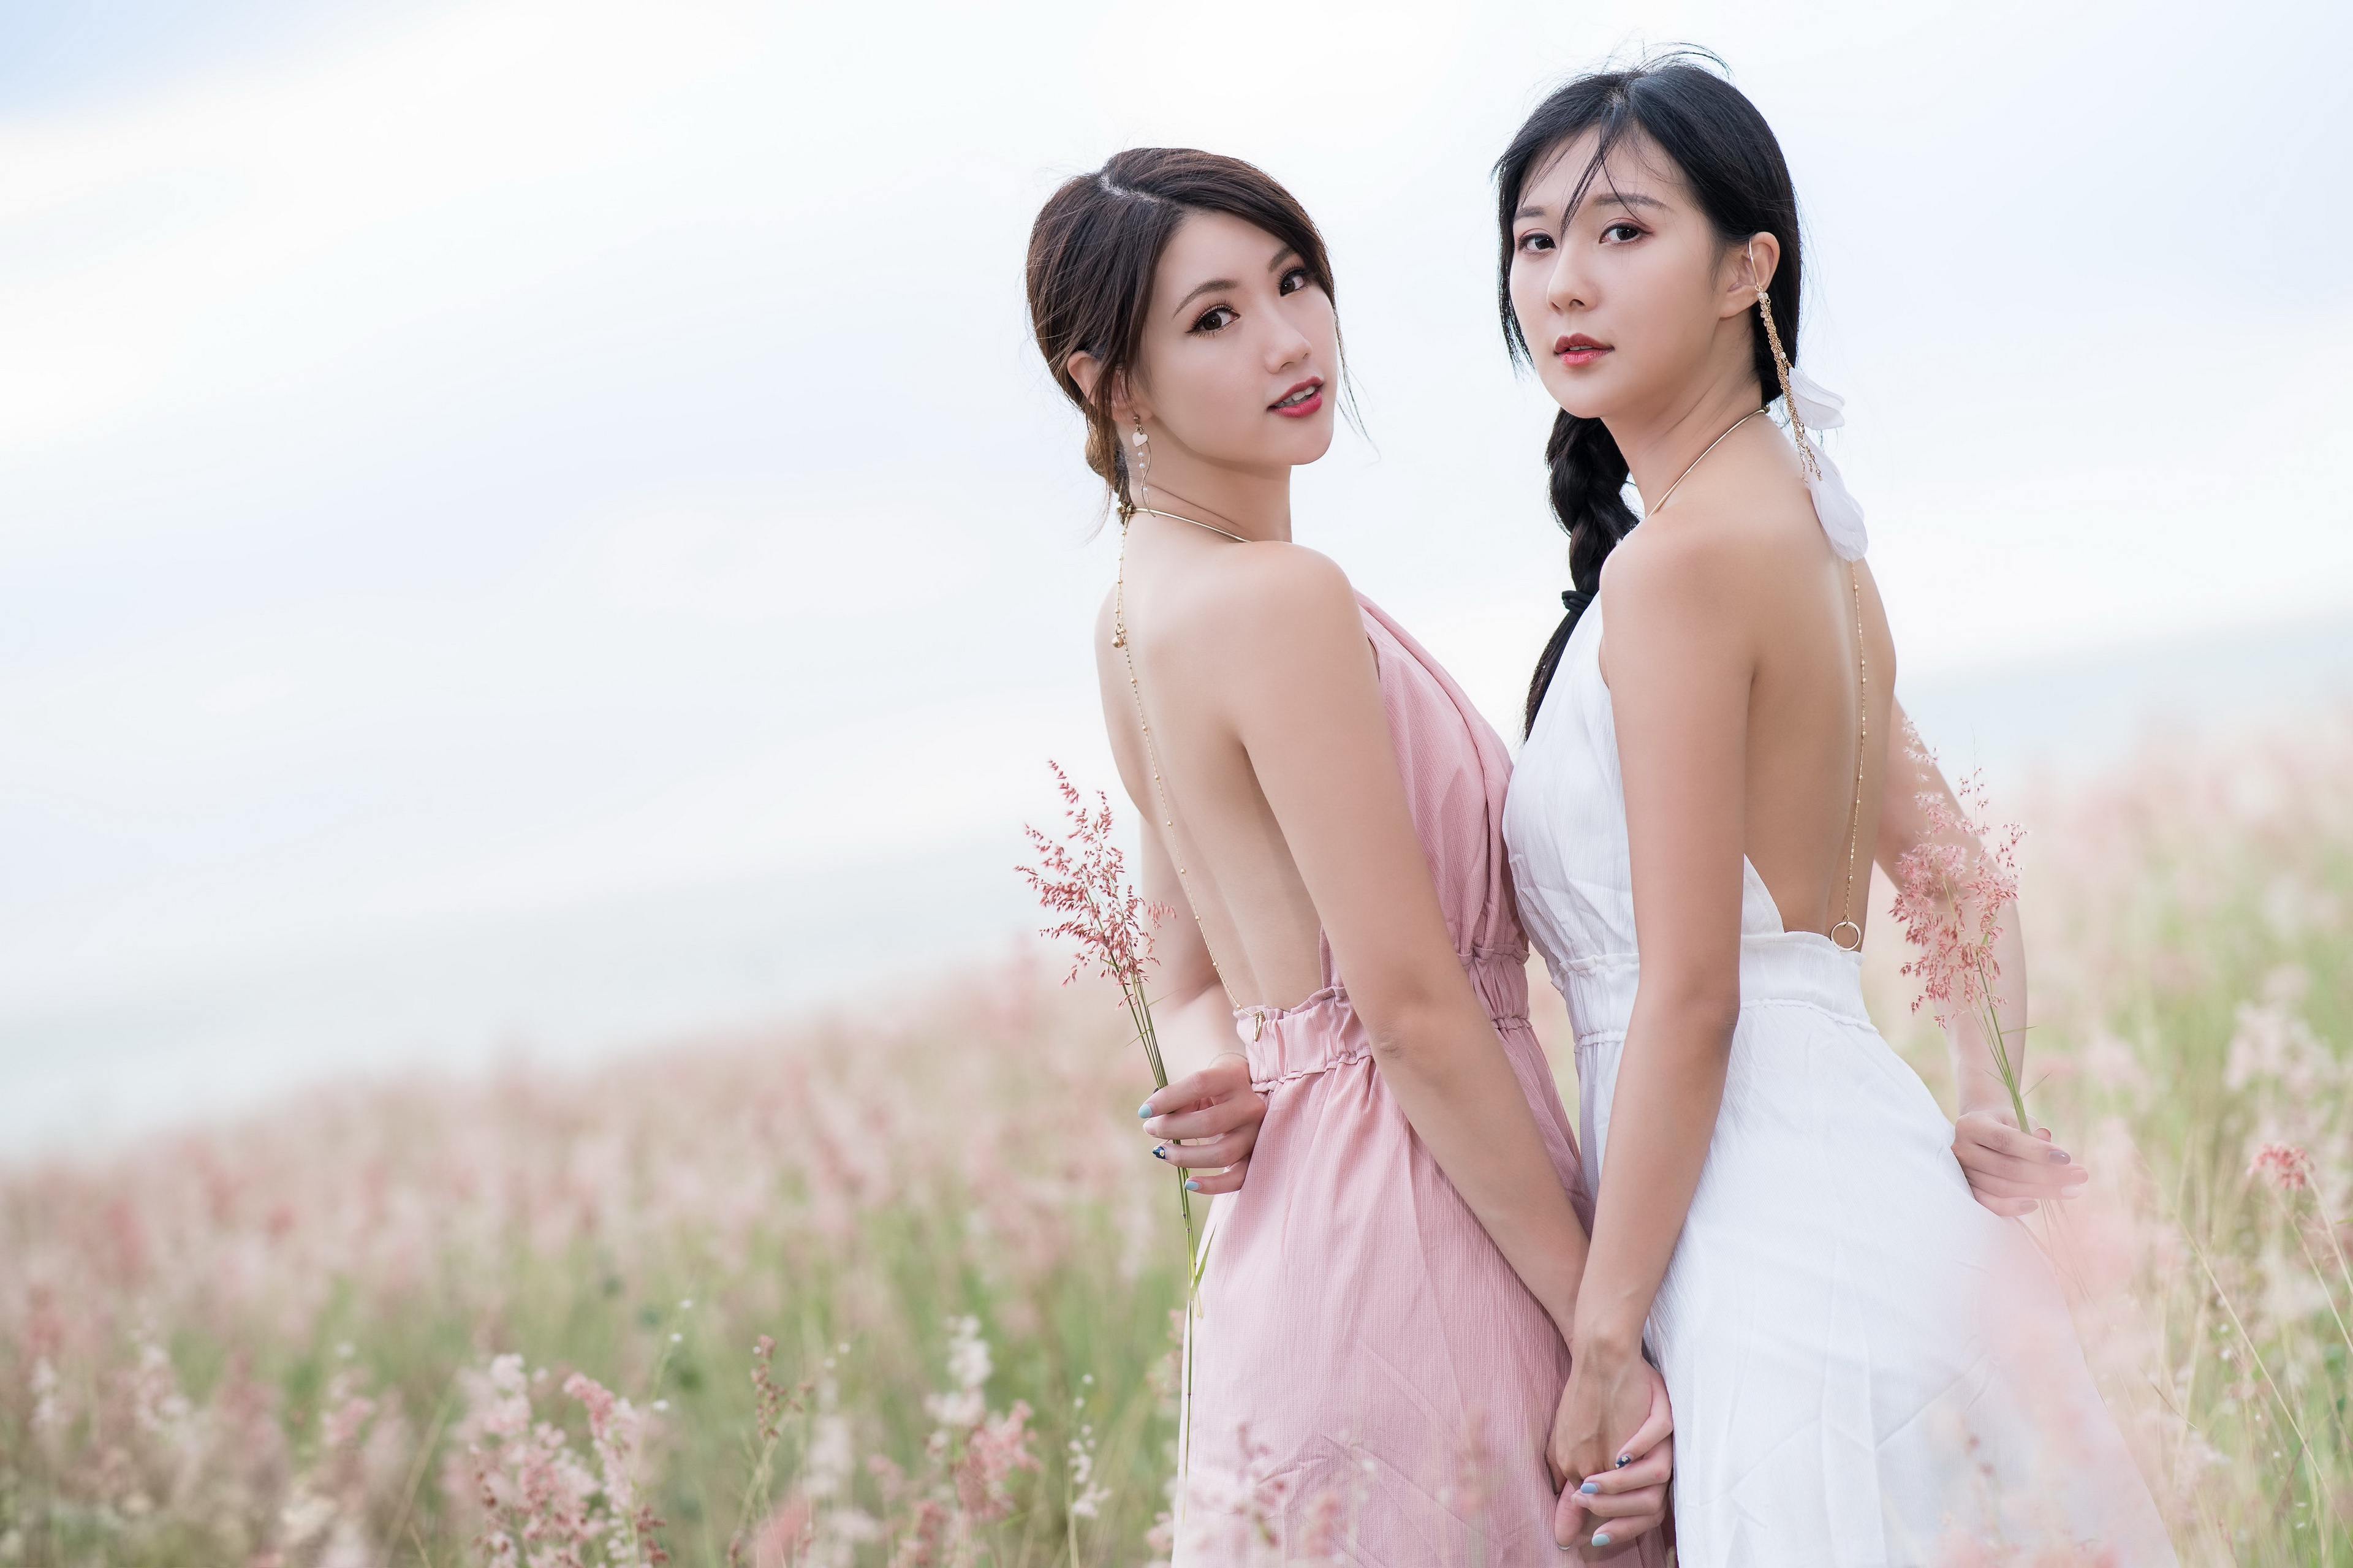 People 3840x2559 Asian model women long hair brunette pink dress white dress braids ponytail holding hands earring looking at viewer two women field flowers